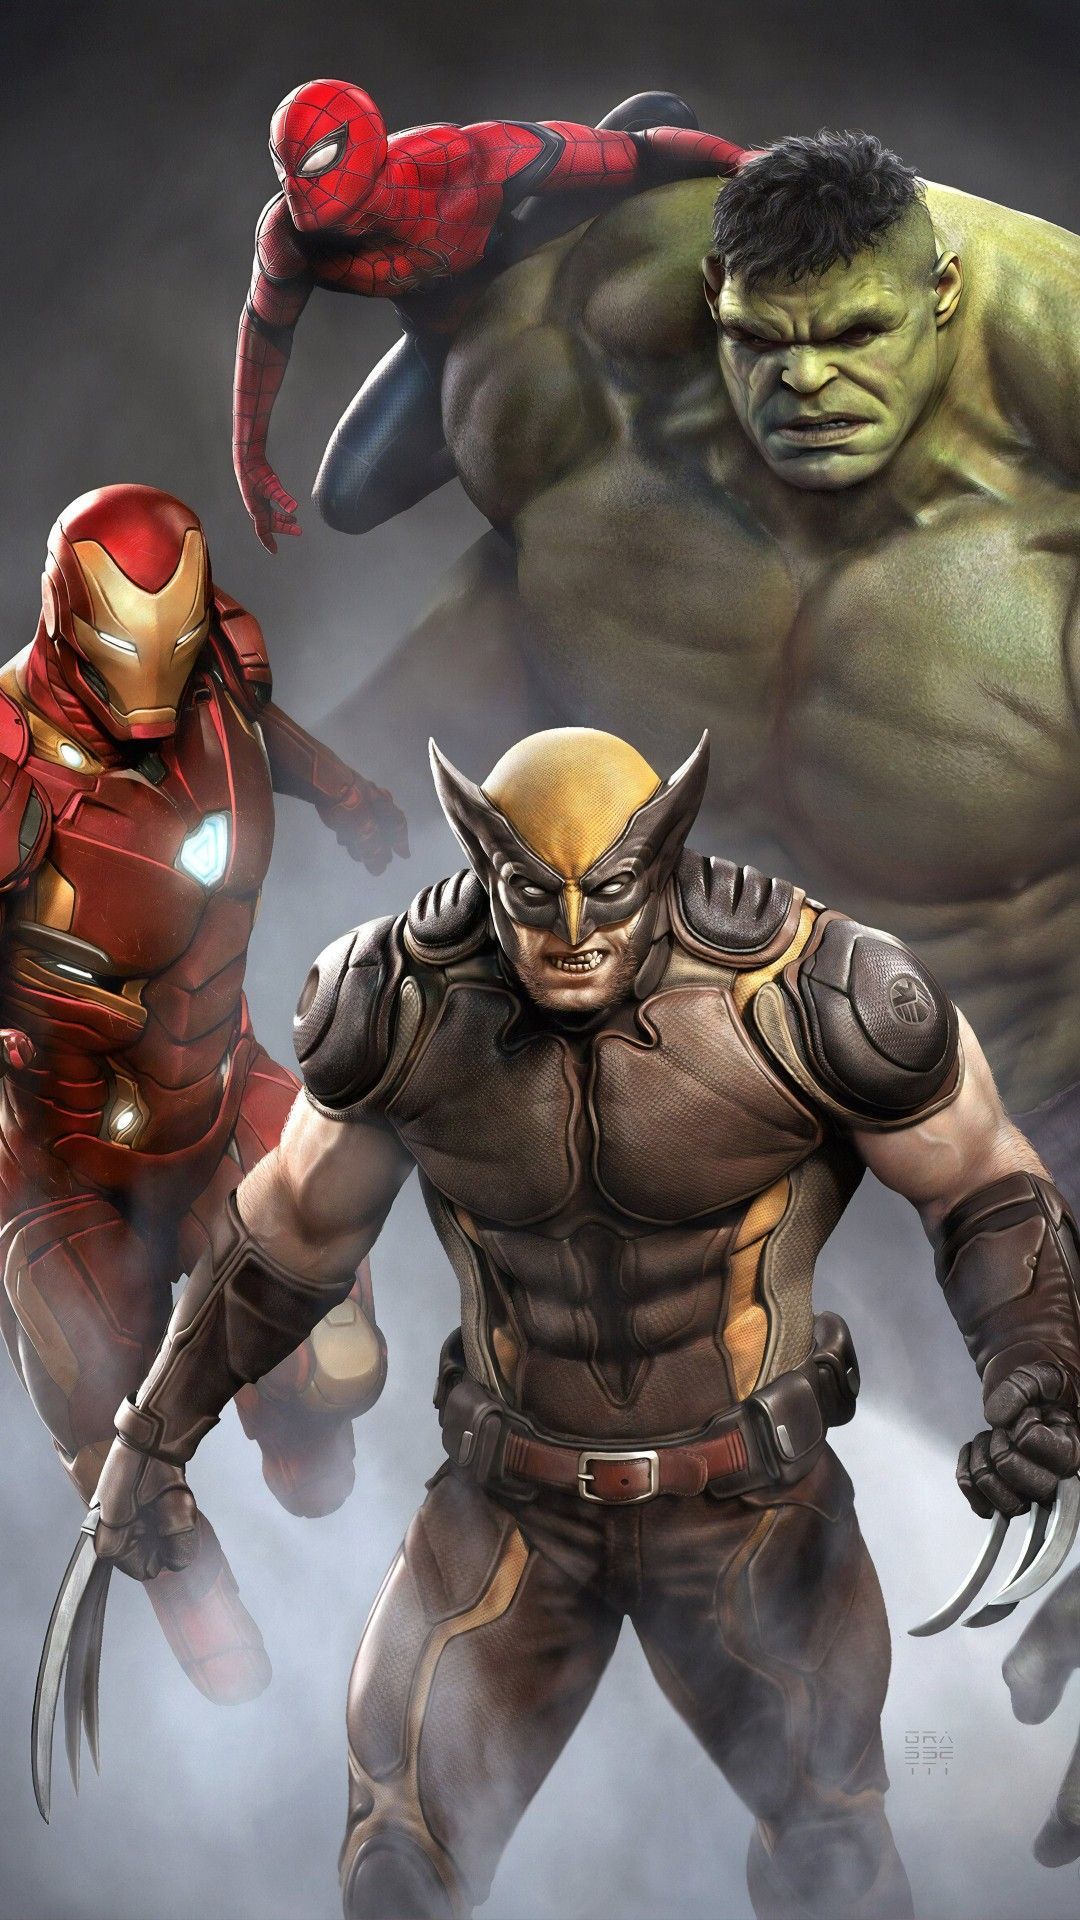 Wolverine, Ironman, Hulk, and Spiderman. Marvel comics superheroes, Marvel superheroes, Marvel comic universe